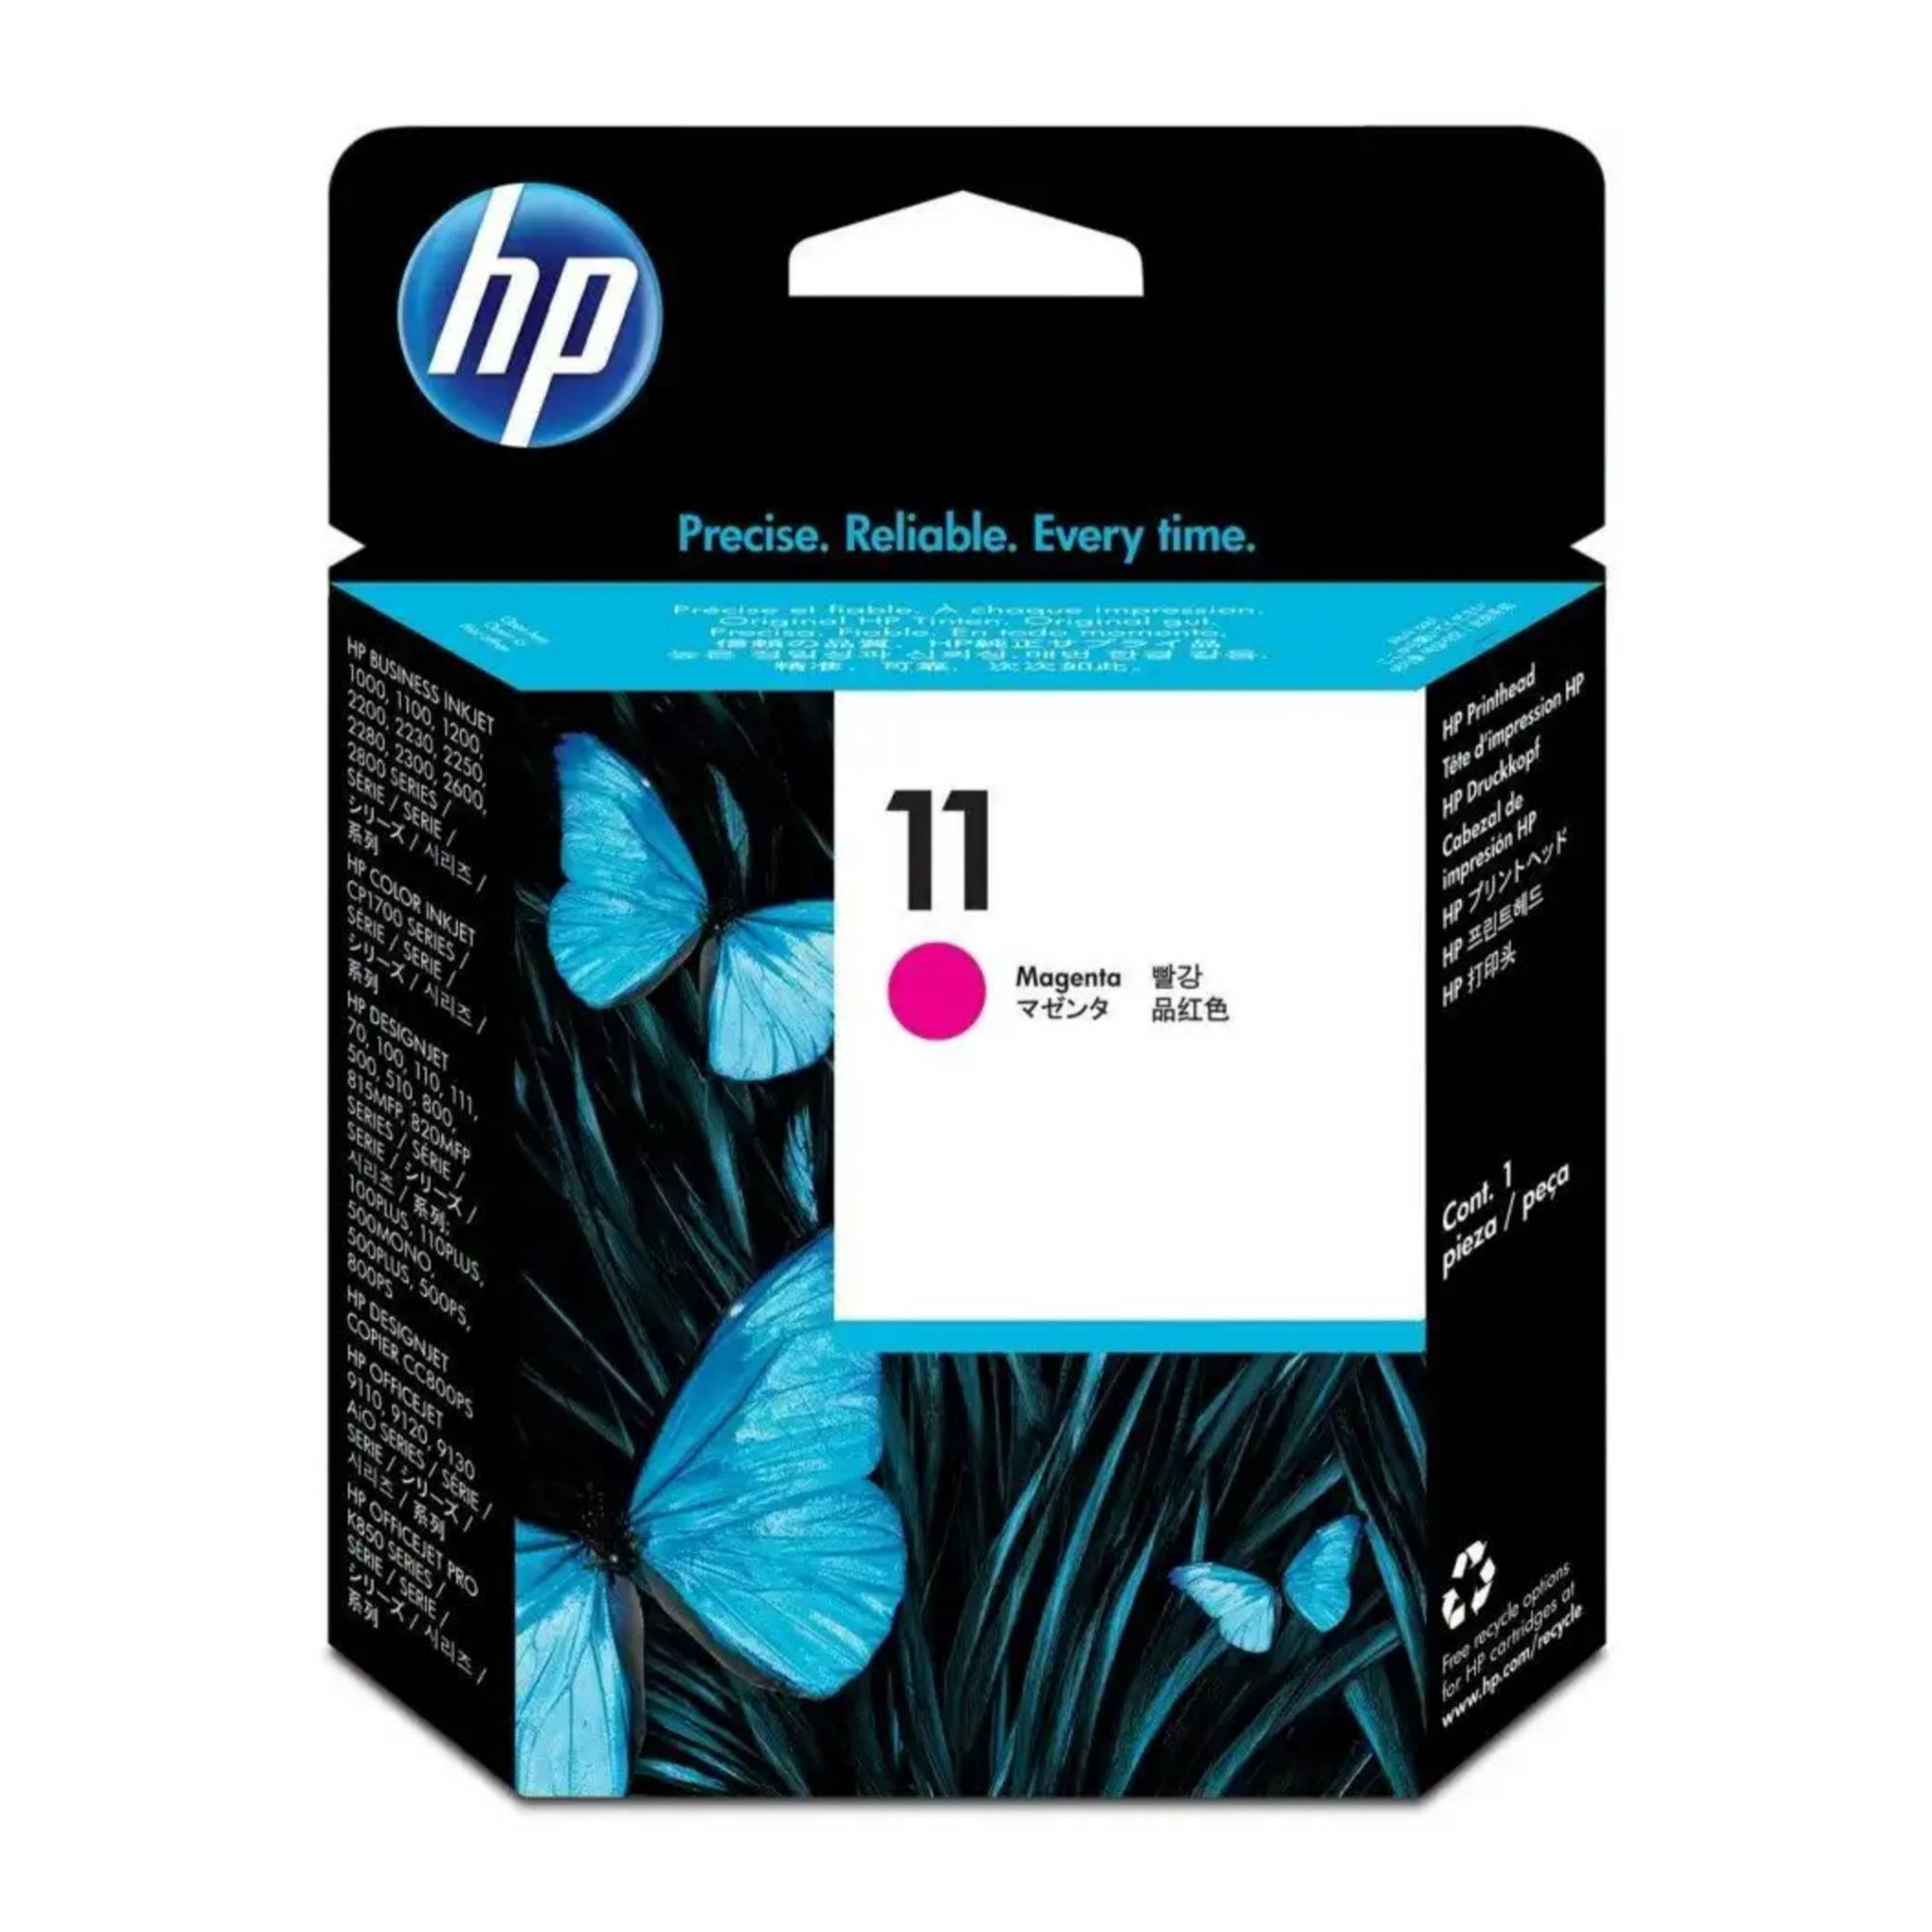 HP 11 Original Inkjet Printhead with Vibrant Color (Magenta)